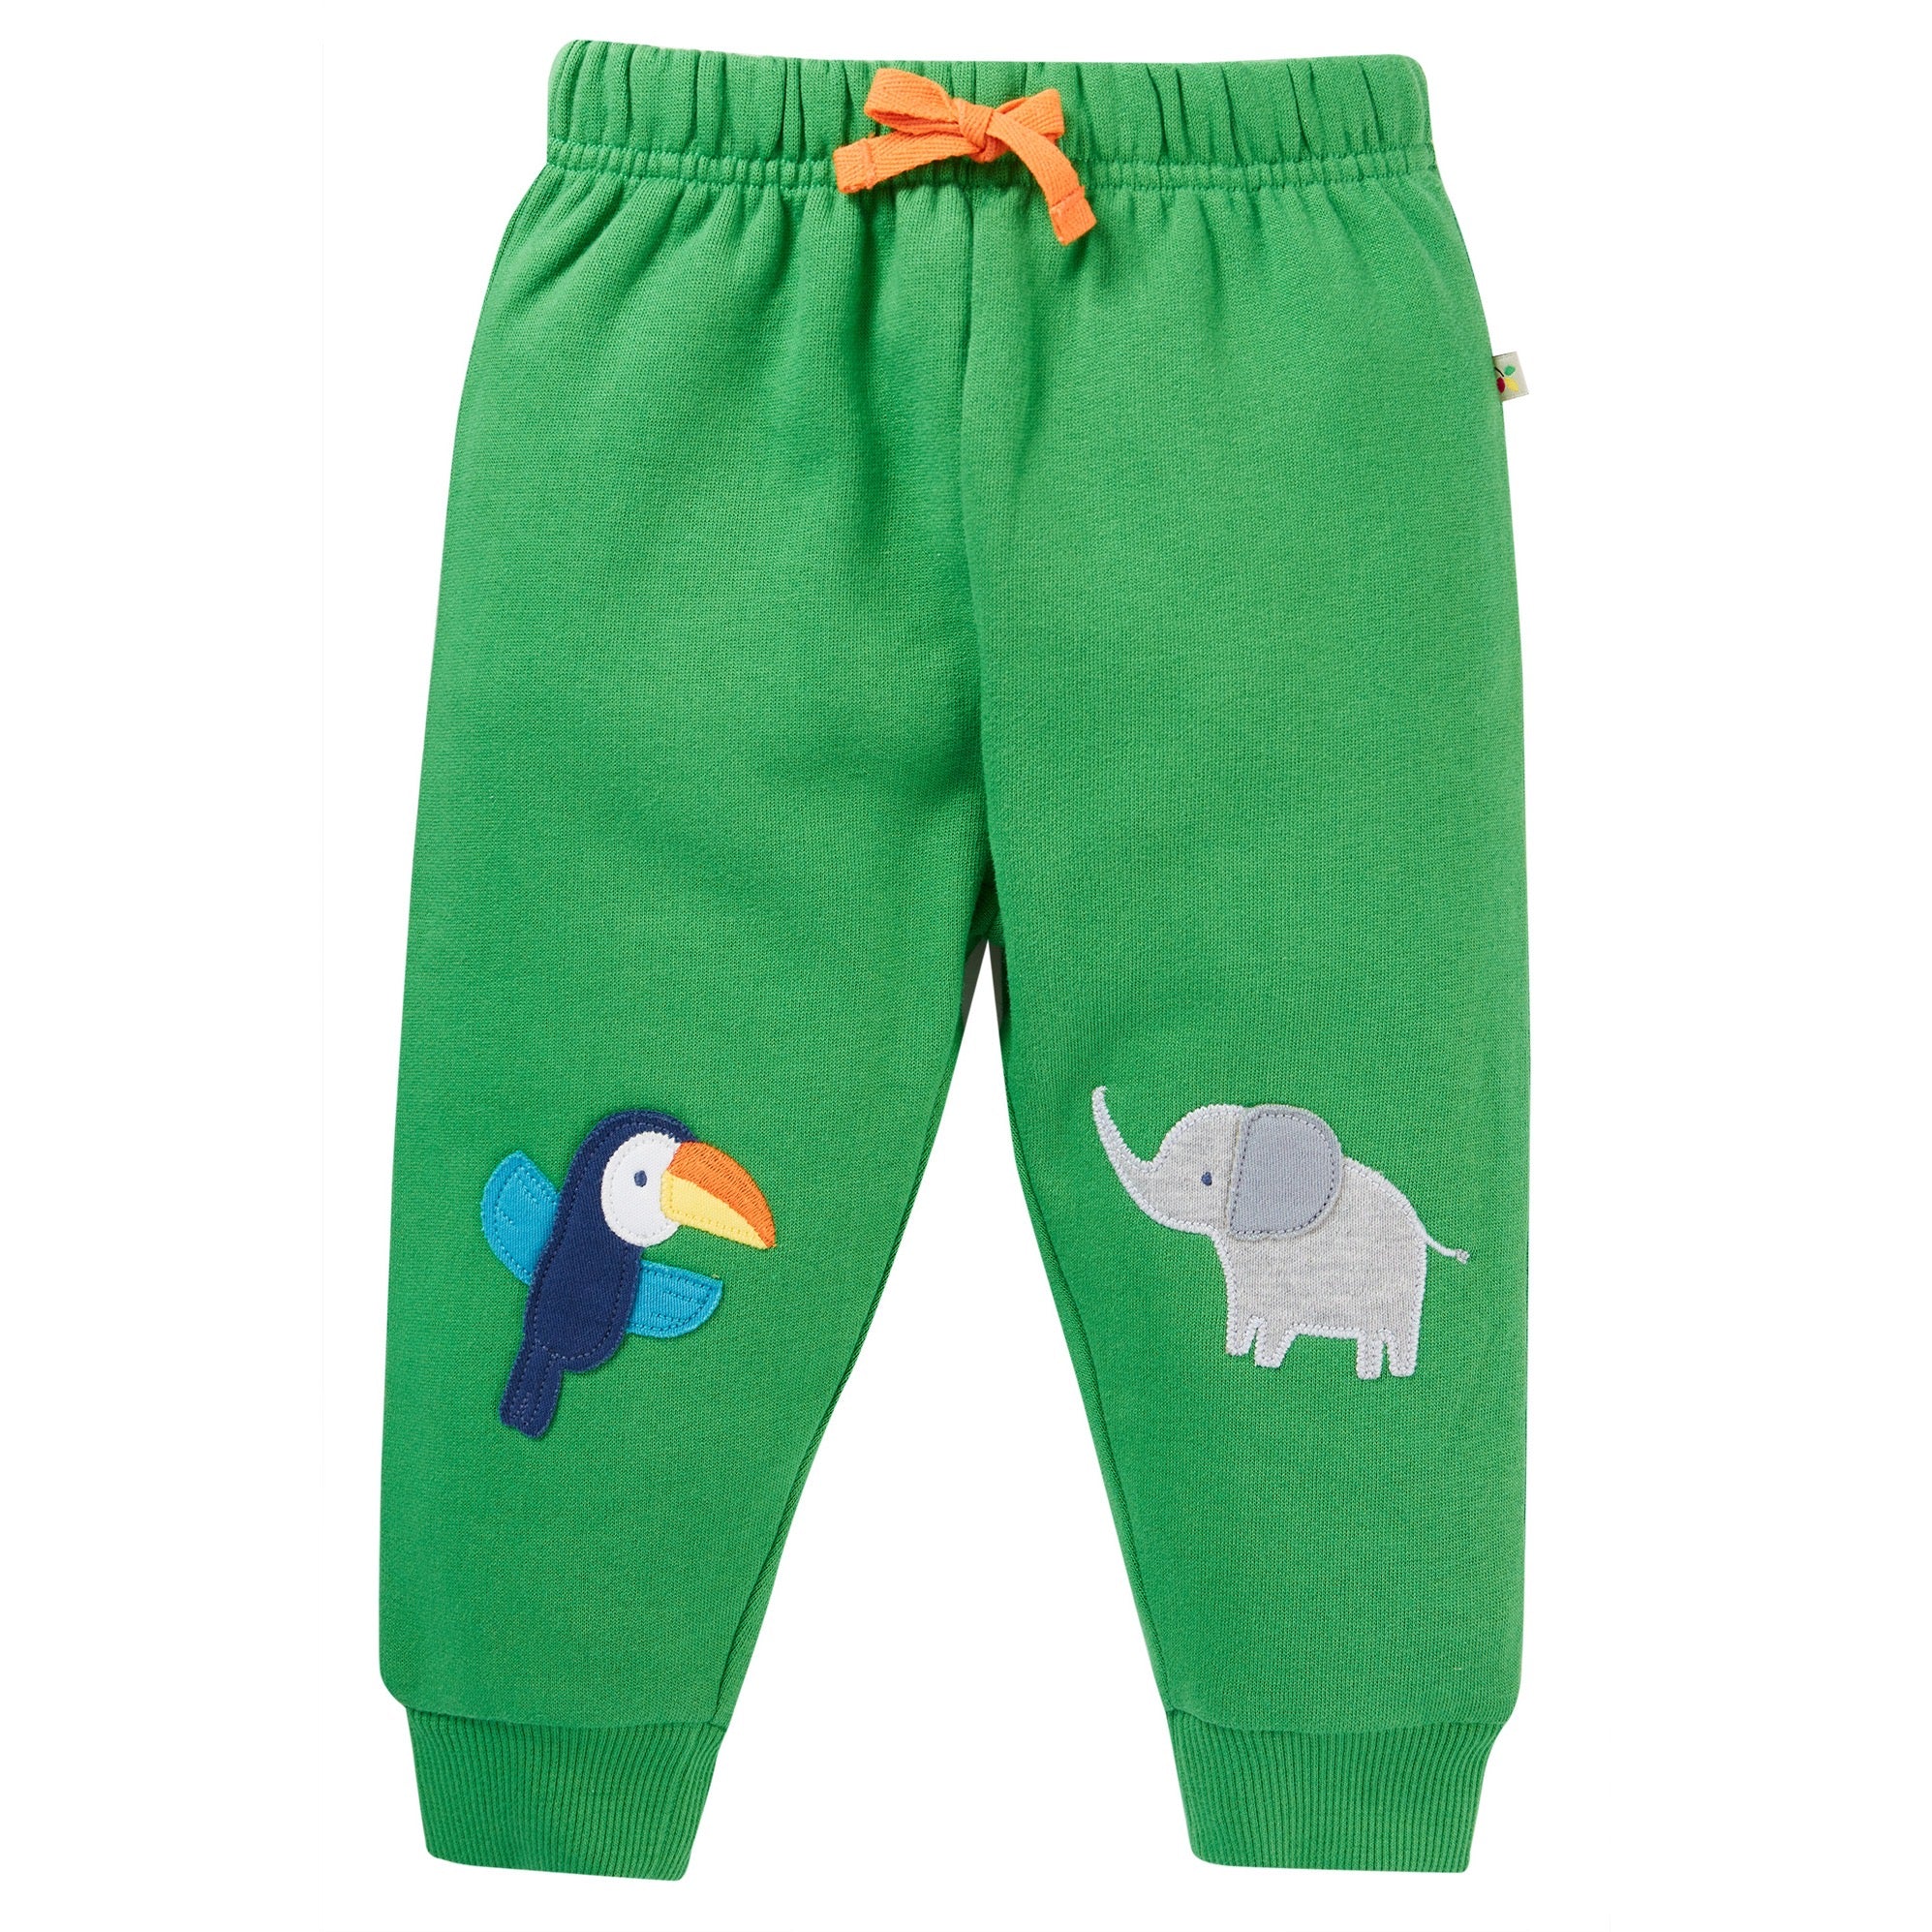 Frugi Infant Crawlers Om1ge Toucan Elephant Clothing 3-6M / Green,6-9M / Green,9-12M / Green,12-18M / Green,18-24M / Green,2-3YRS / Green,3-4YRS / Green